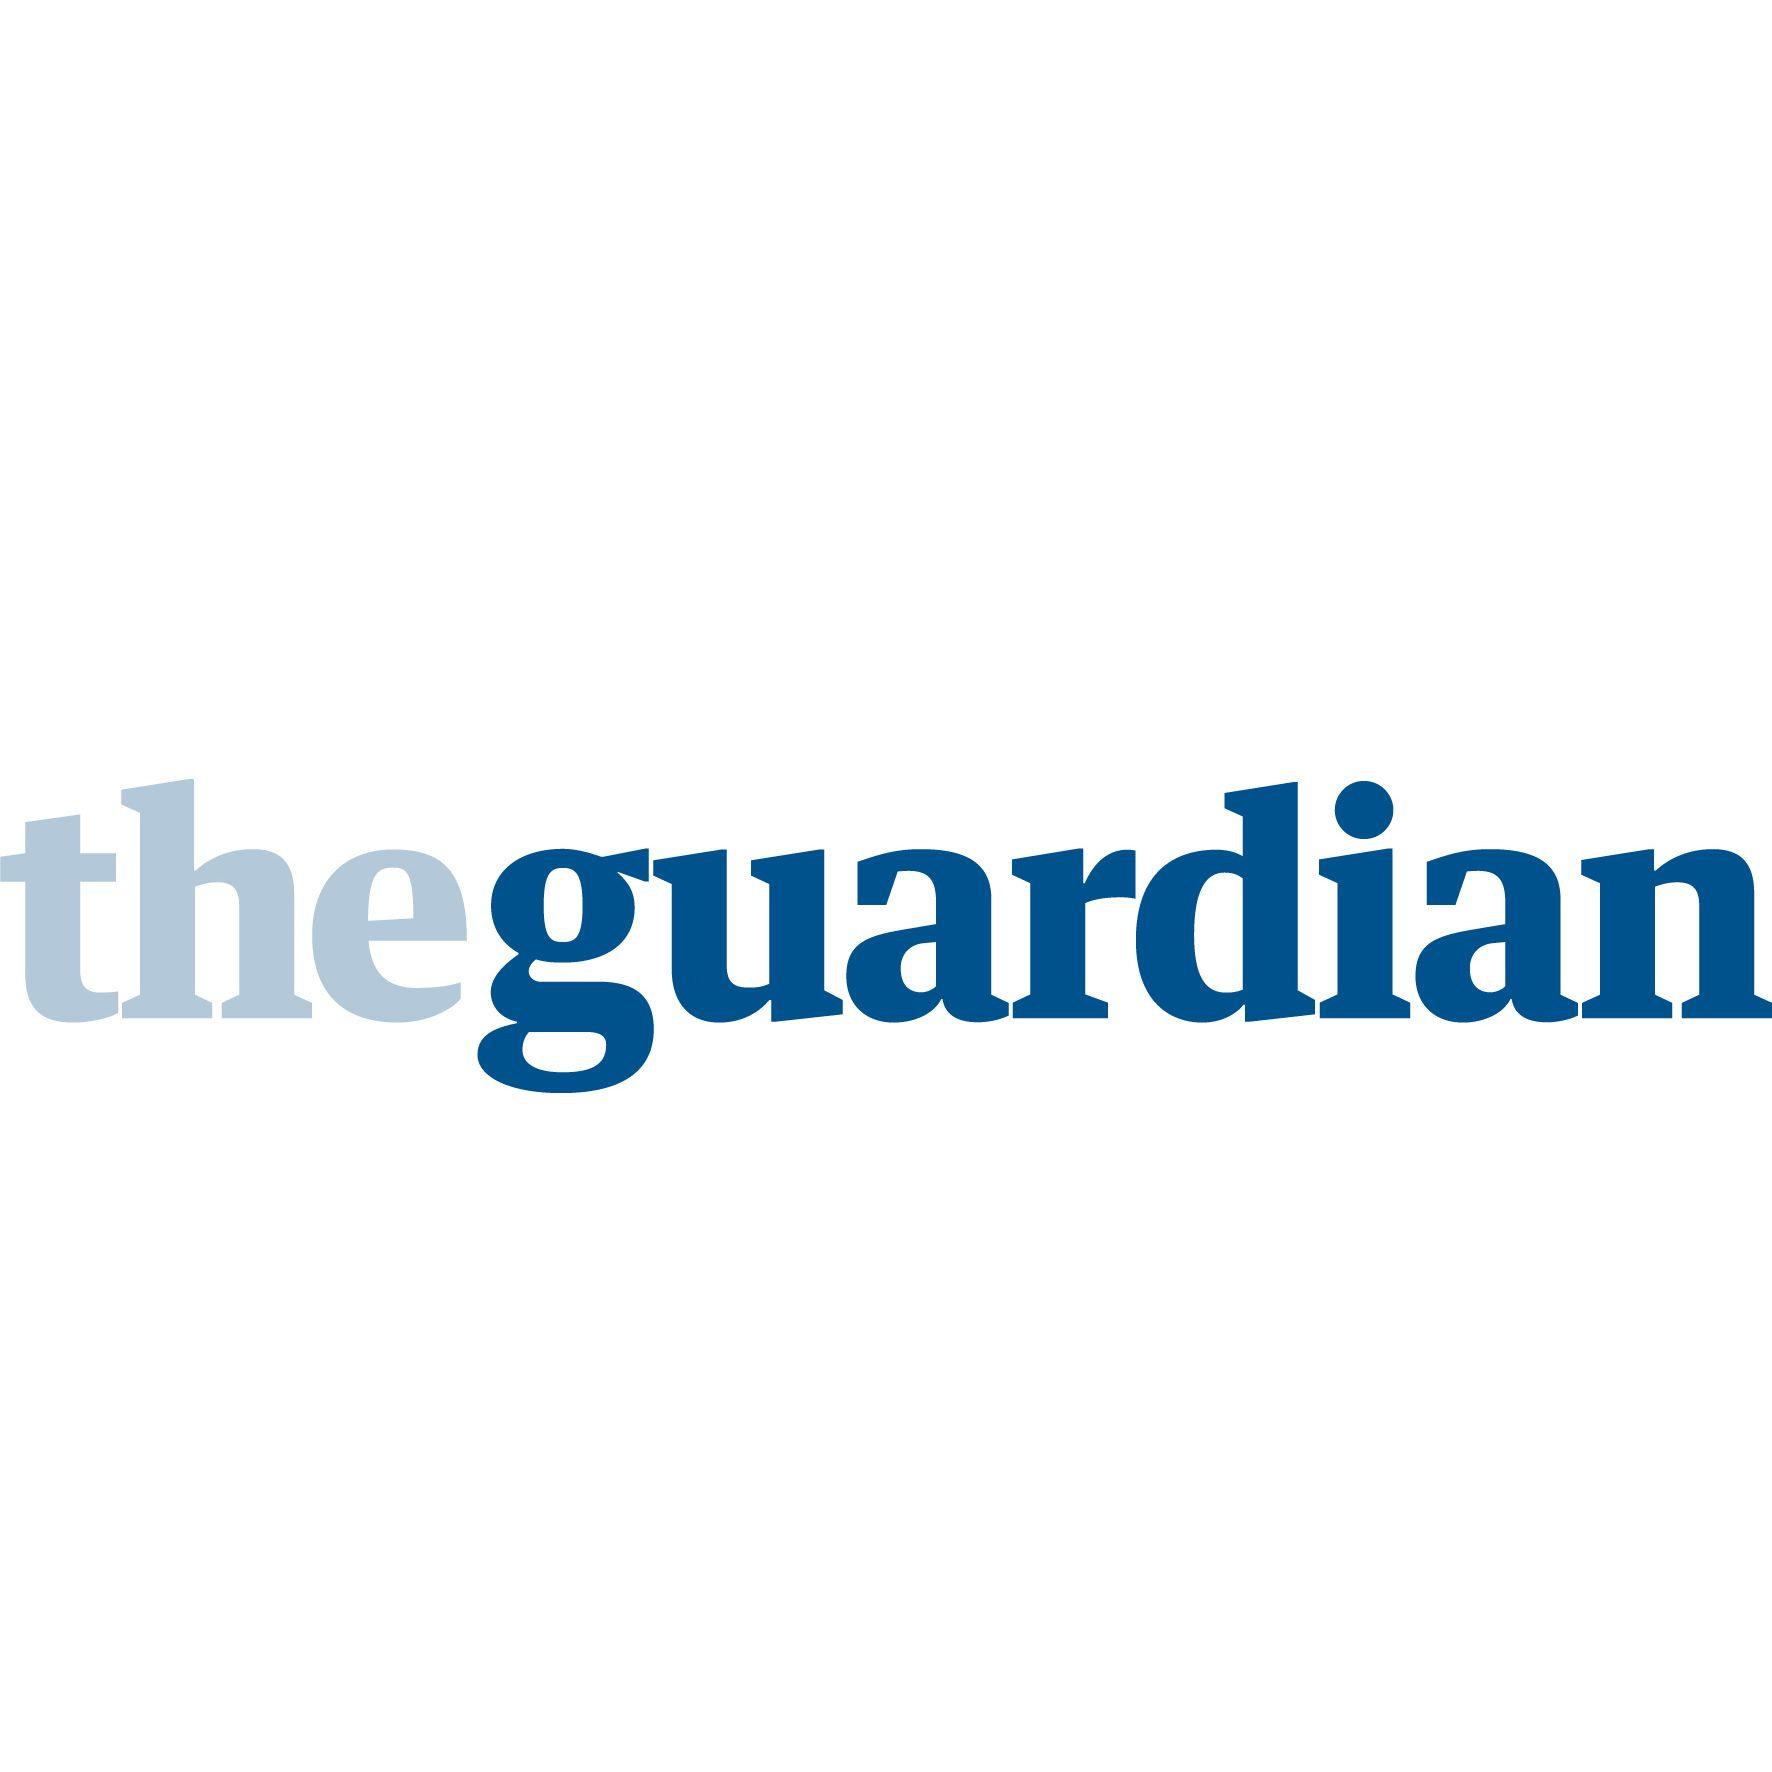 Guardian Logo - the guardian logo - Danielle Citron